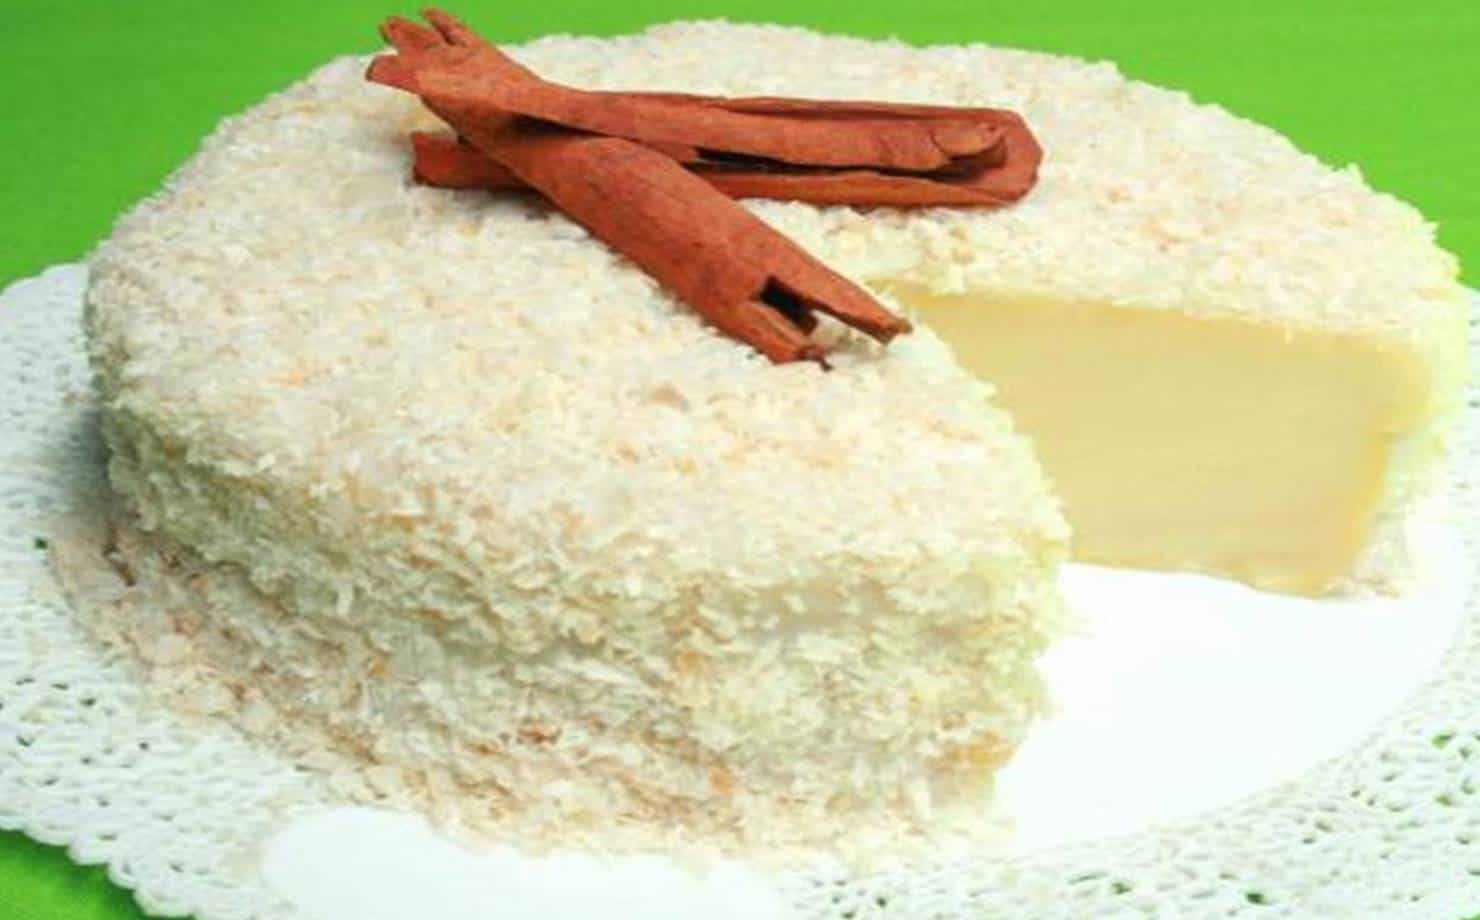 Confira a receita de um delicioso bolo de coco com leite condensado